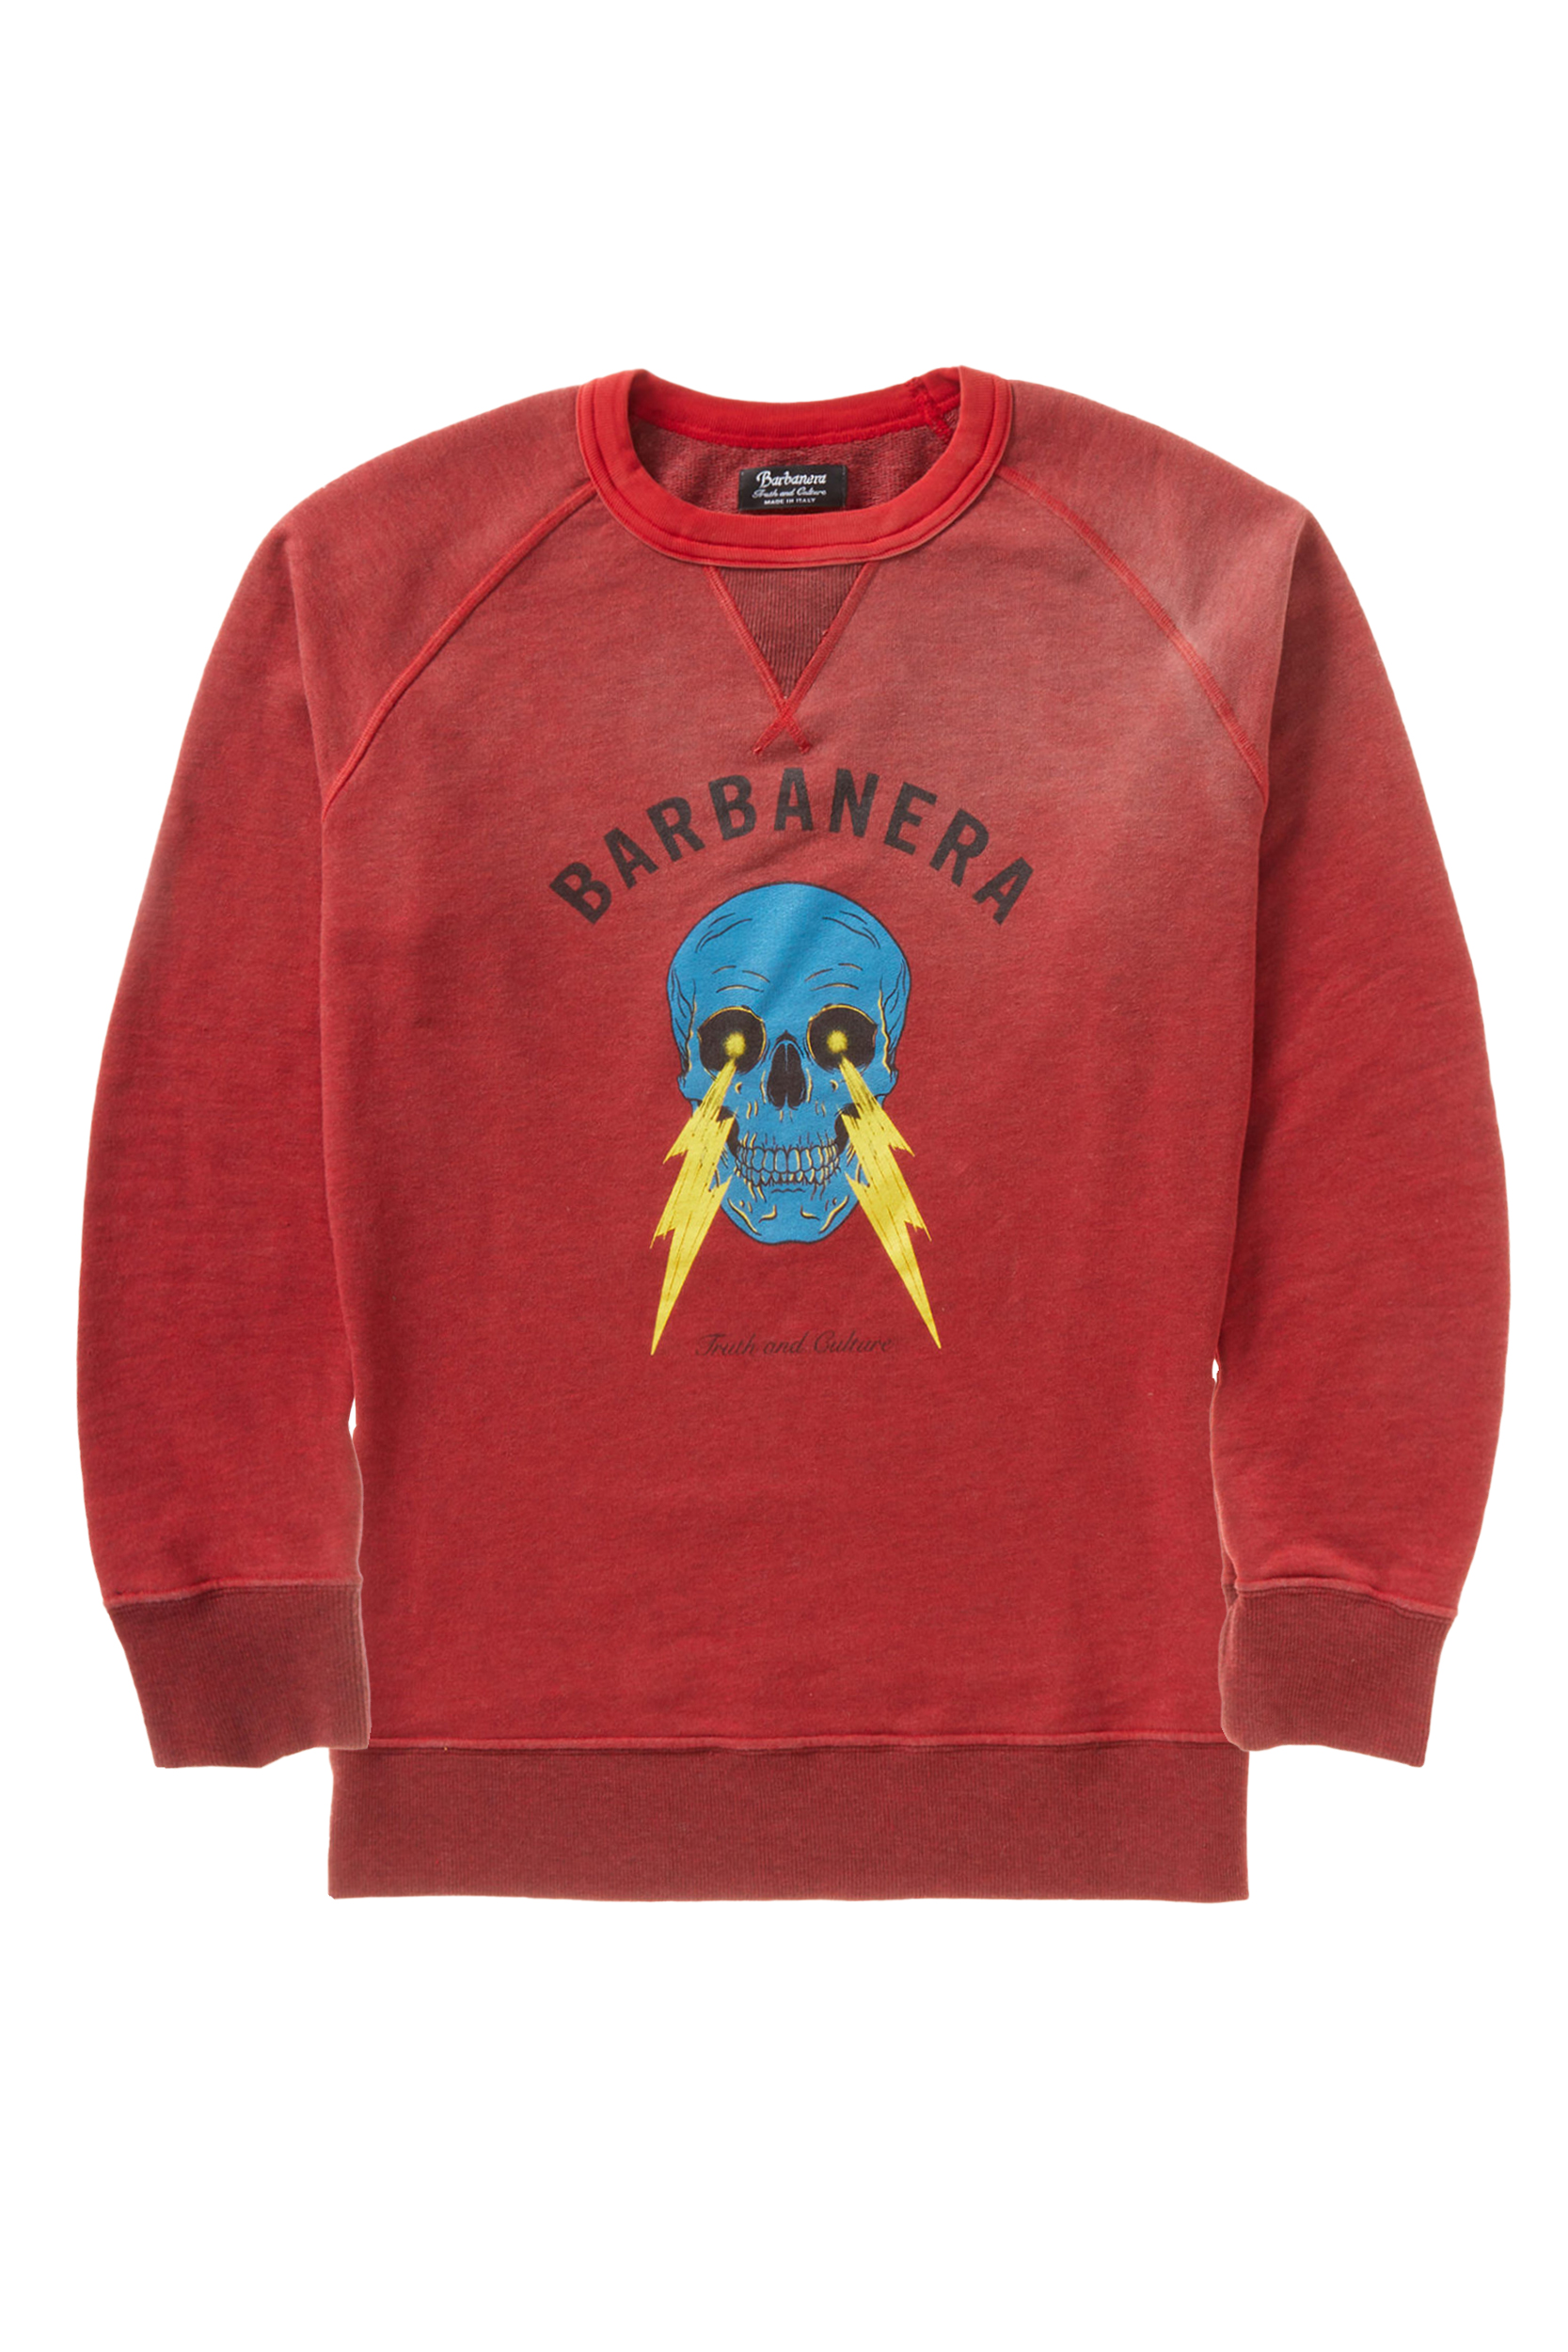 Meroni Vintage Red Crew Neck Cotton Skull And Lightning Bolt Graphic  Sweatshirt - Barbanera